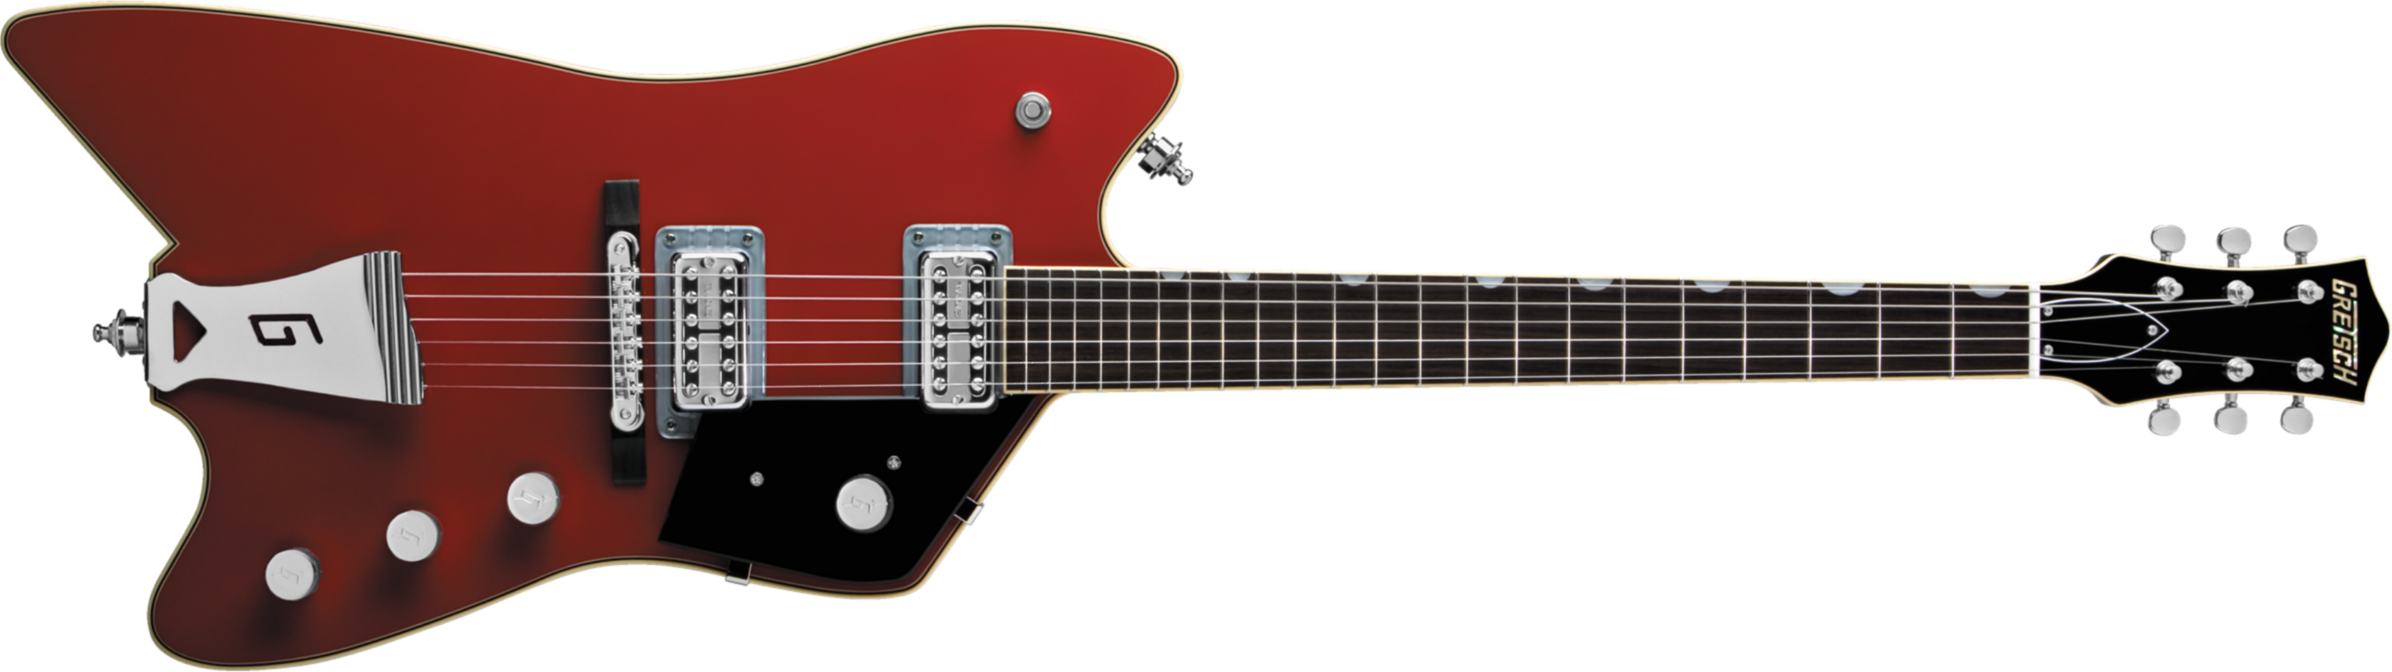 Gretsch G6199 Billy-bo - Firebird Red - Guitarra electrica retro rock - Main picture